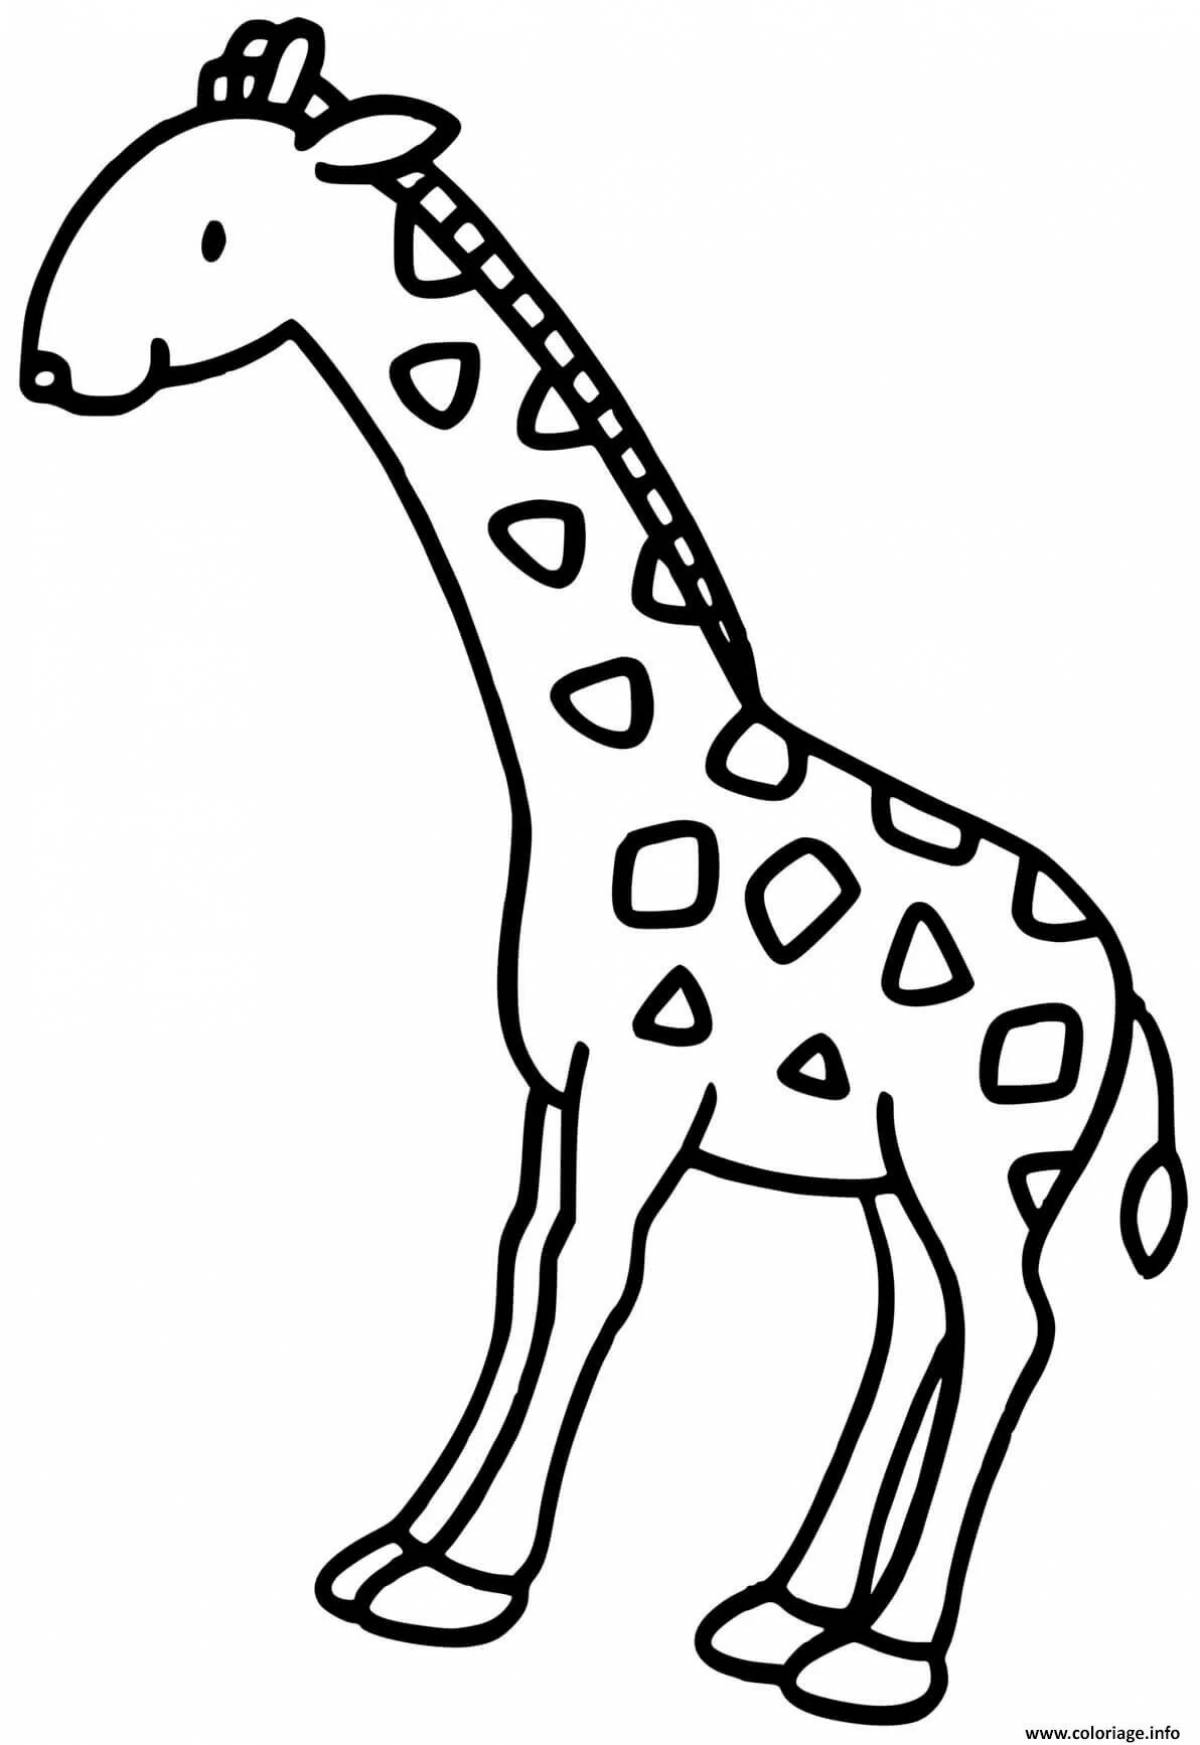 Outstanding giraffe drawing for kids